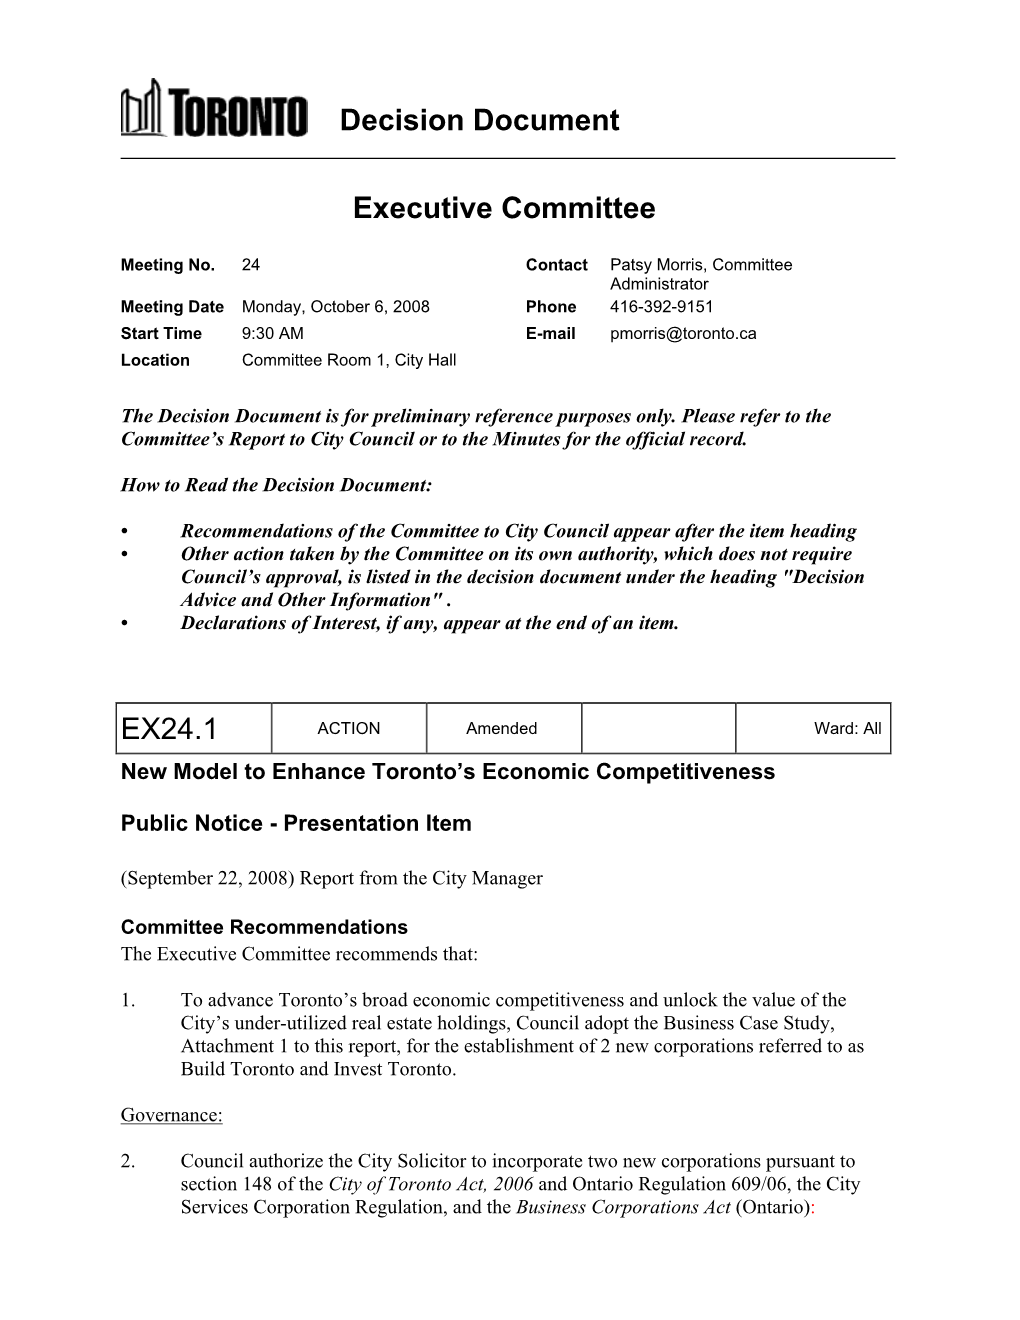 Decision Document Executive Committee EX24.1